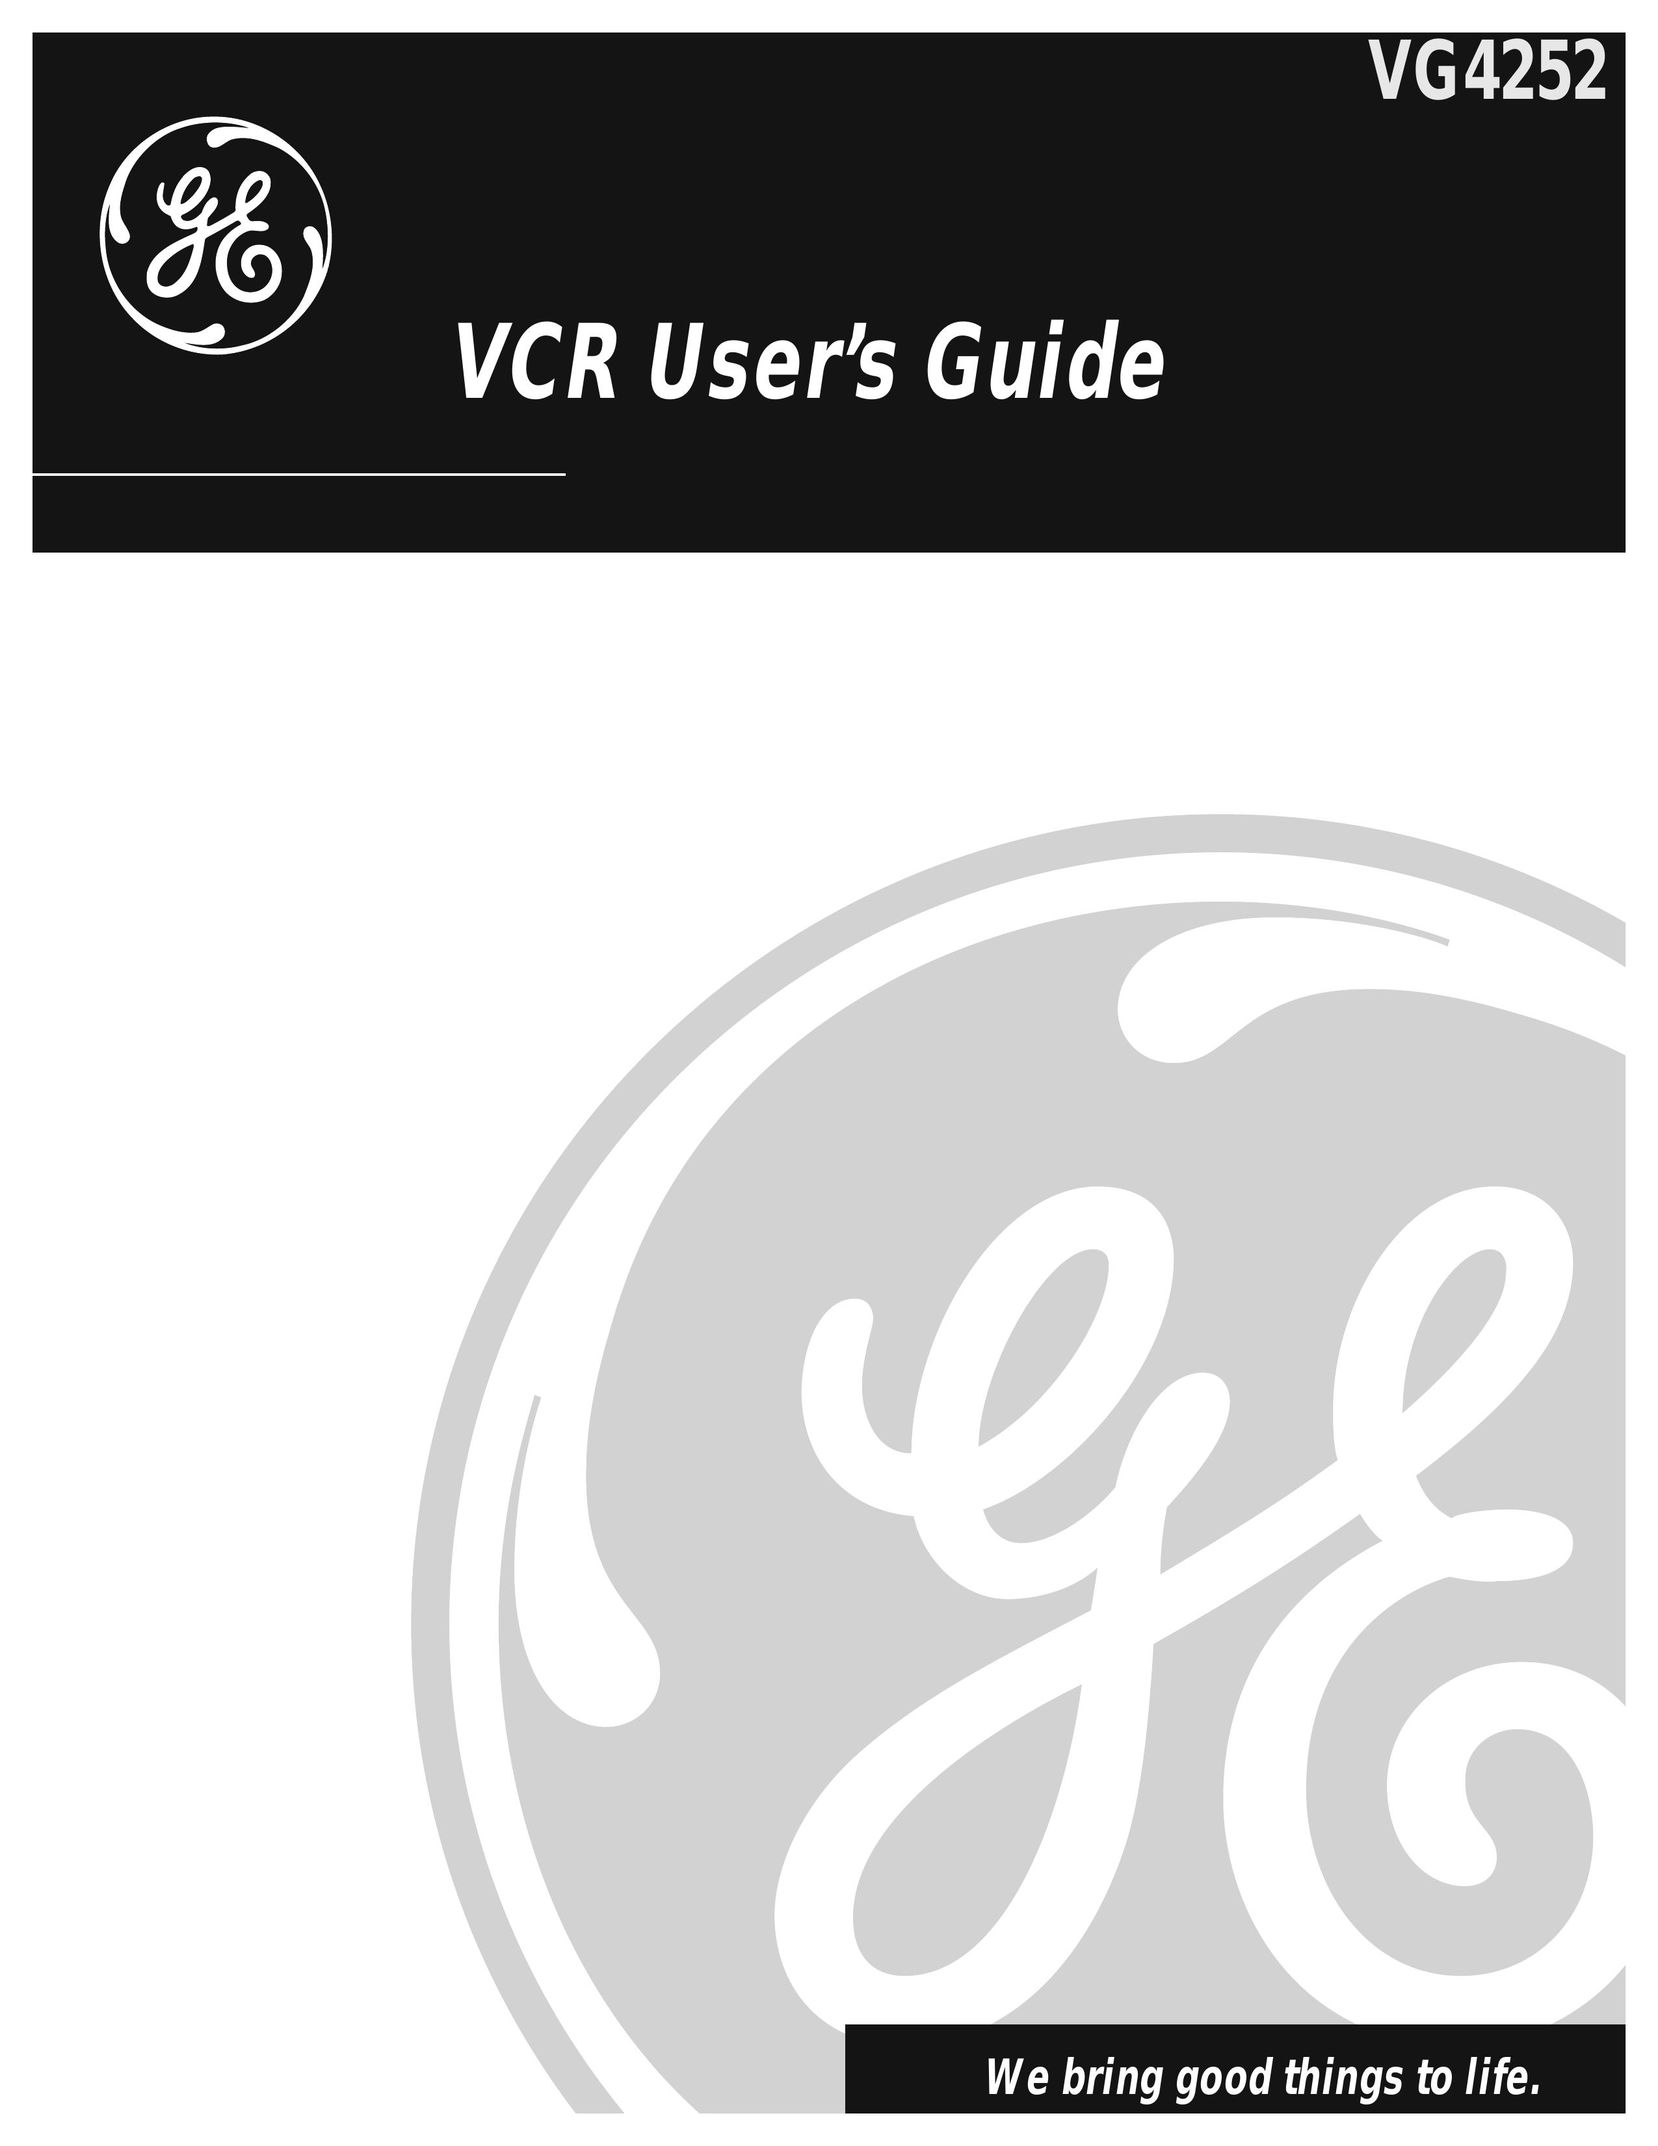 GE VG4252 VCR User Manual